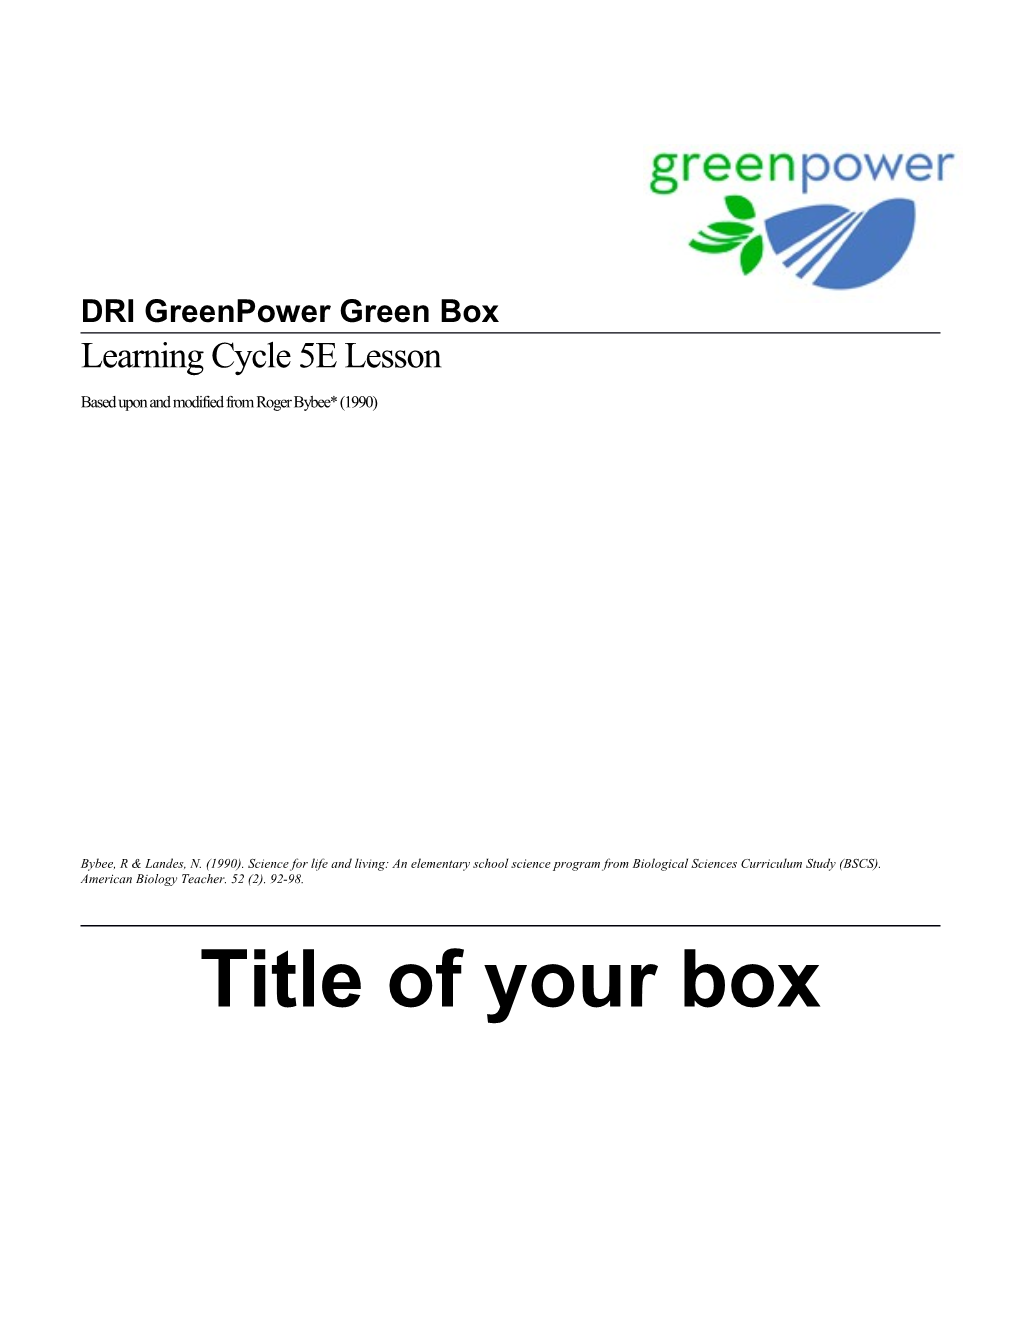 DRI Greenpower Green Box